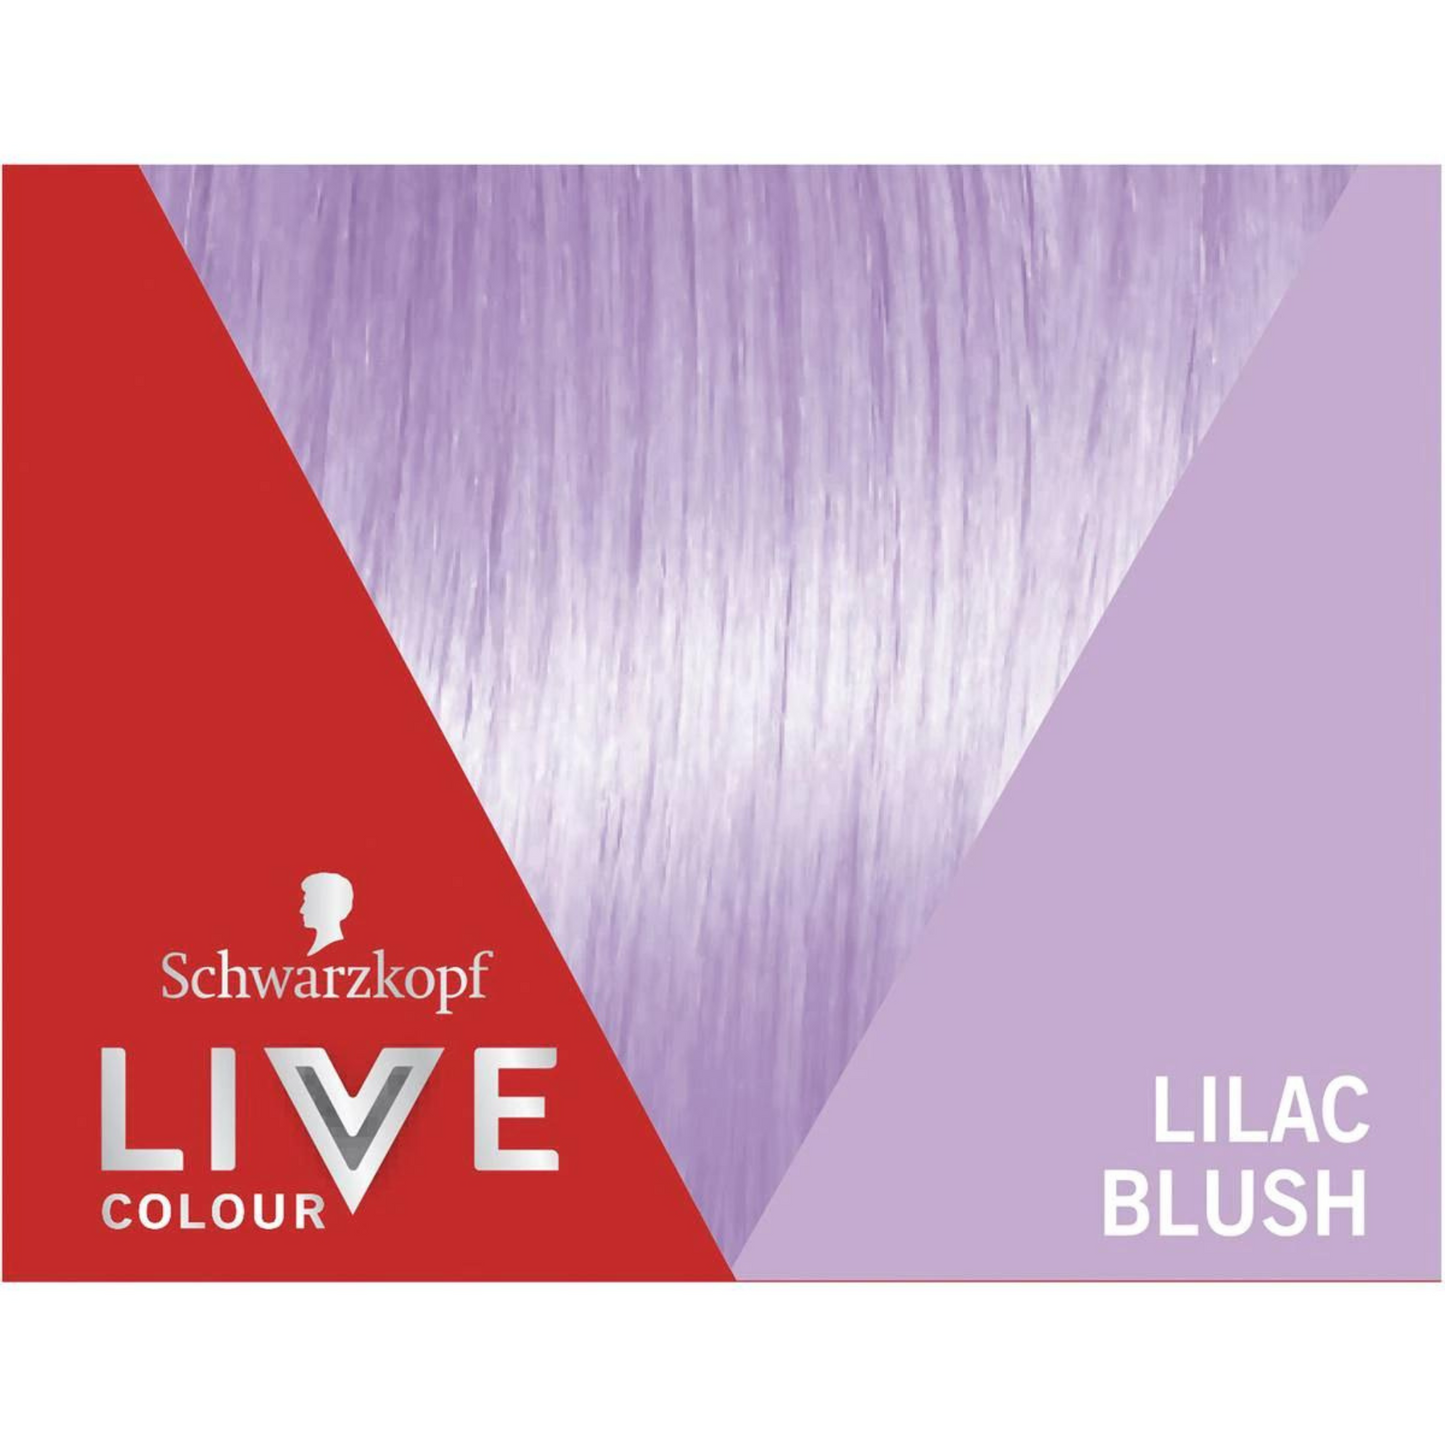 Schwarzkopf Live Colour Pastels Semi-Permanent Hair Colour Lilac Blush 1 Kit